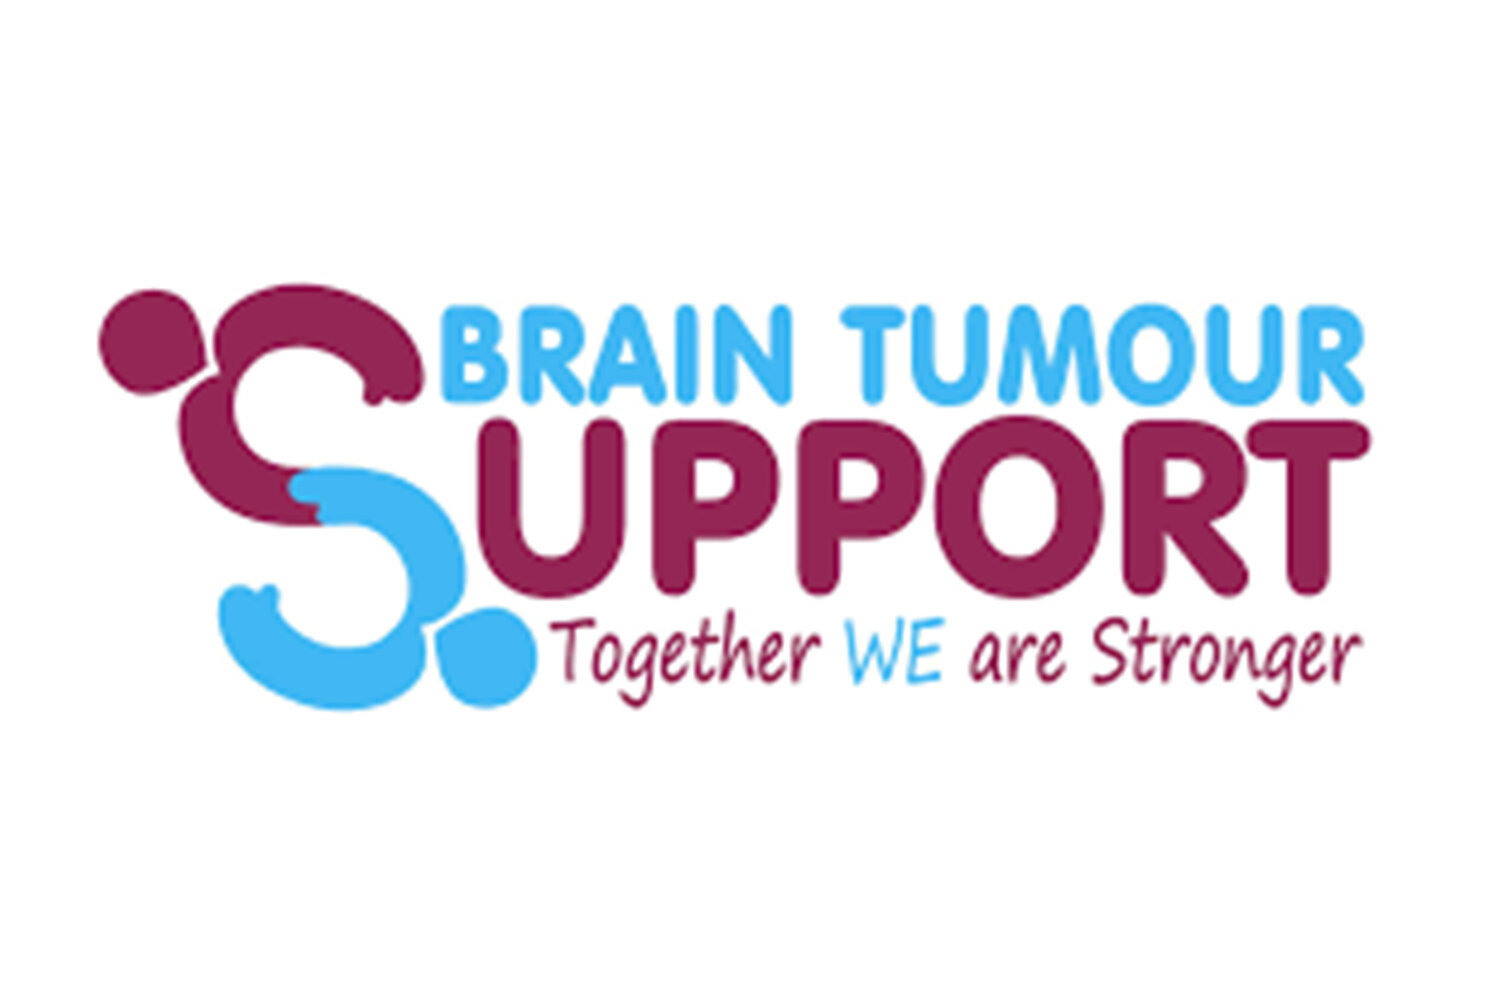 brain tumour support logo.jpg